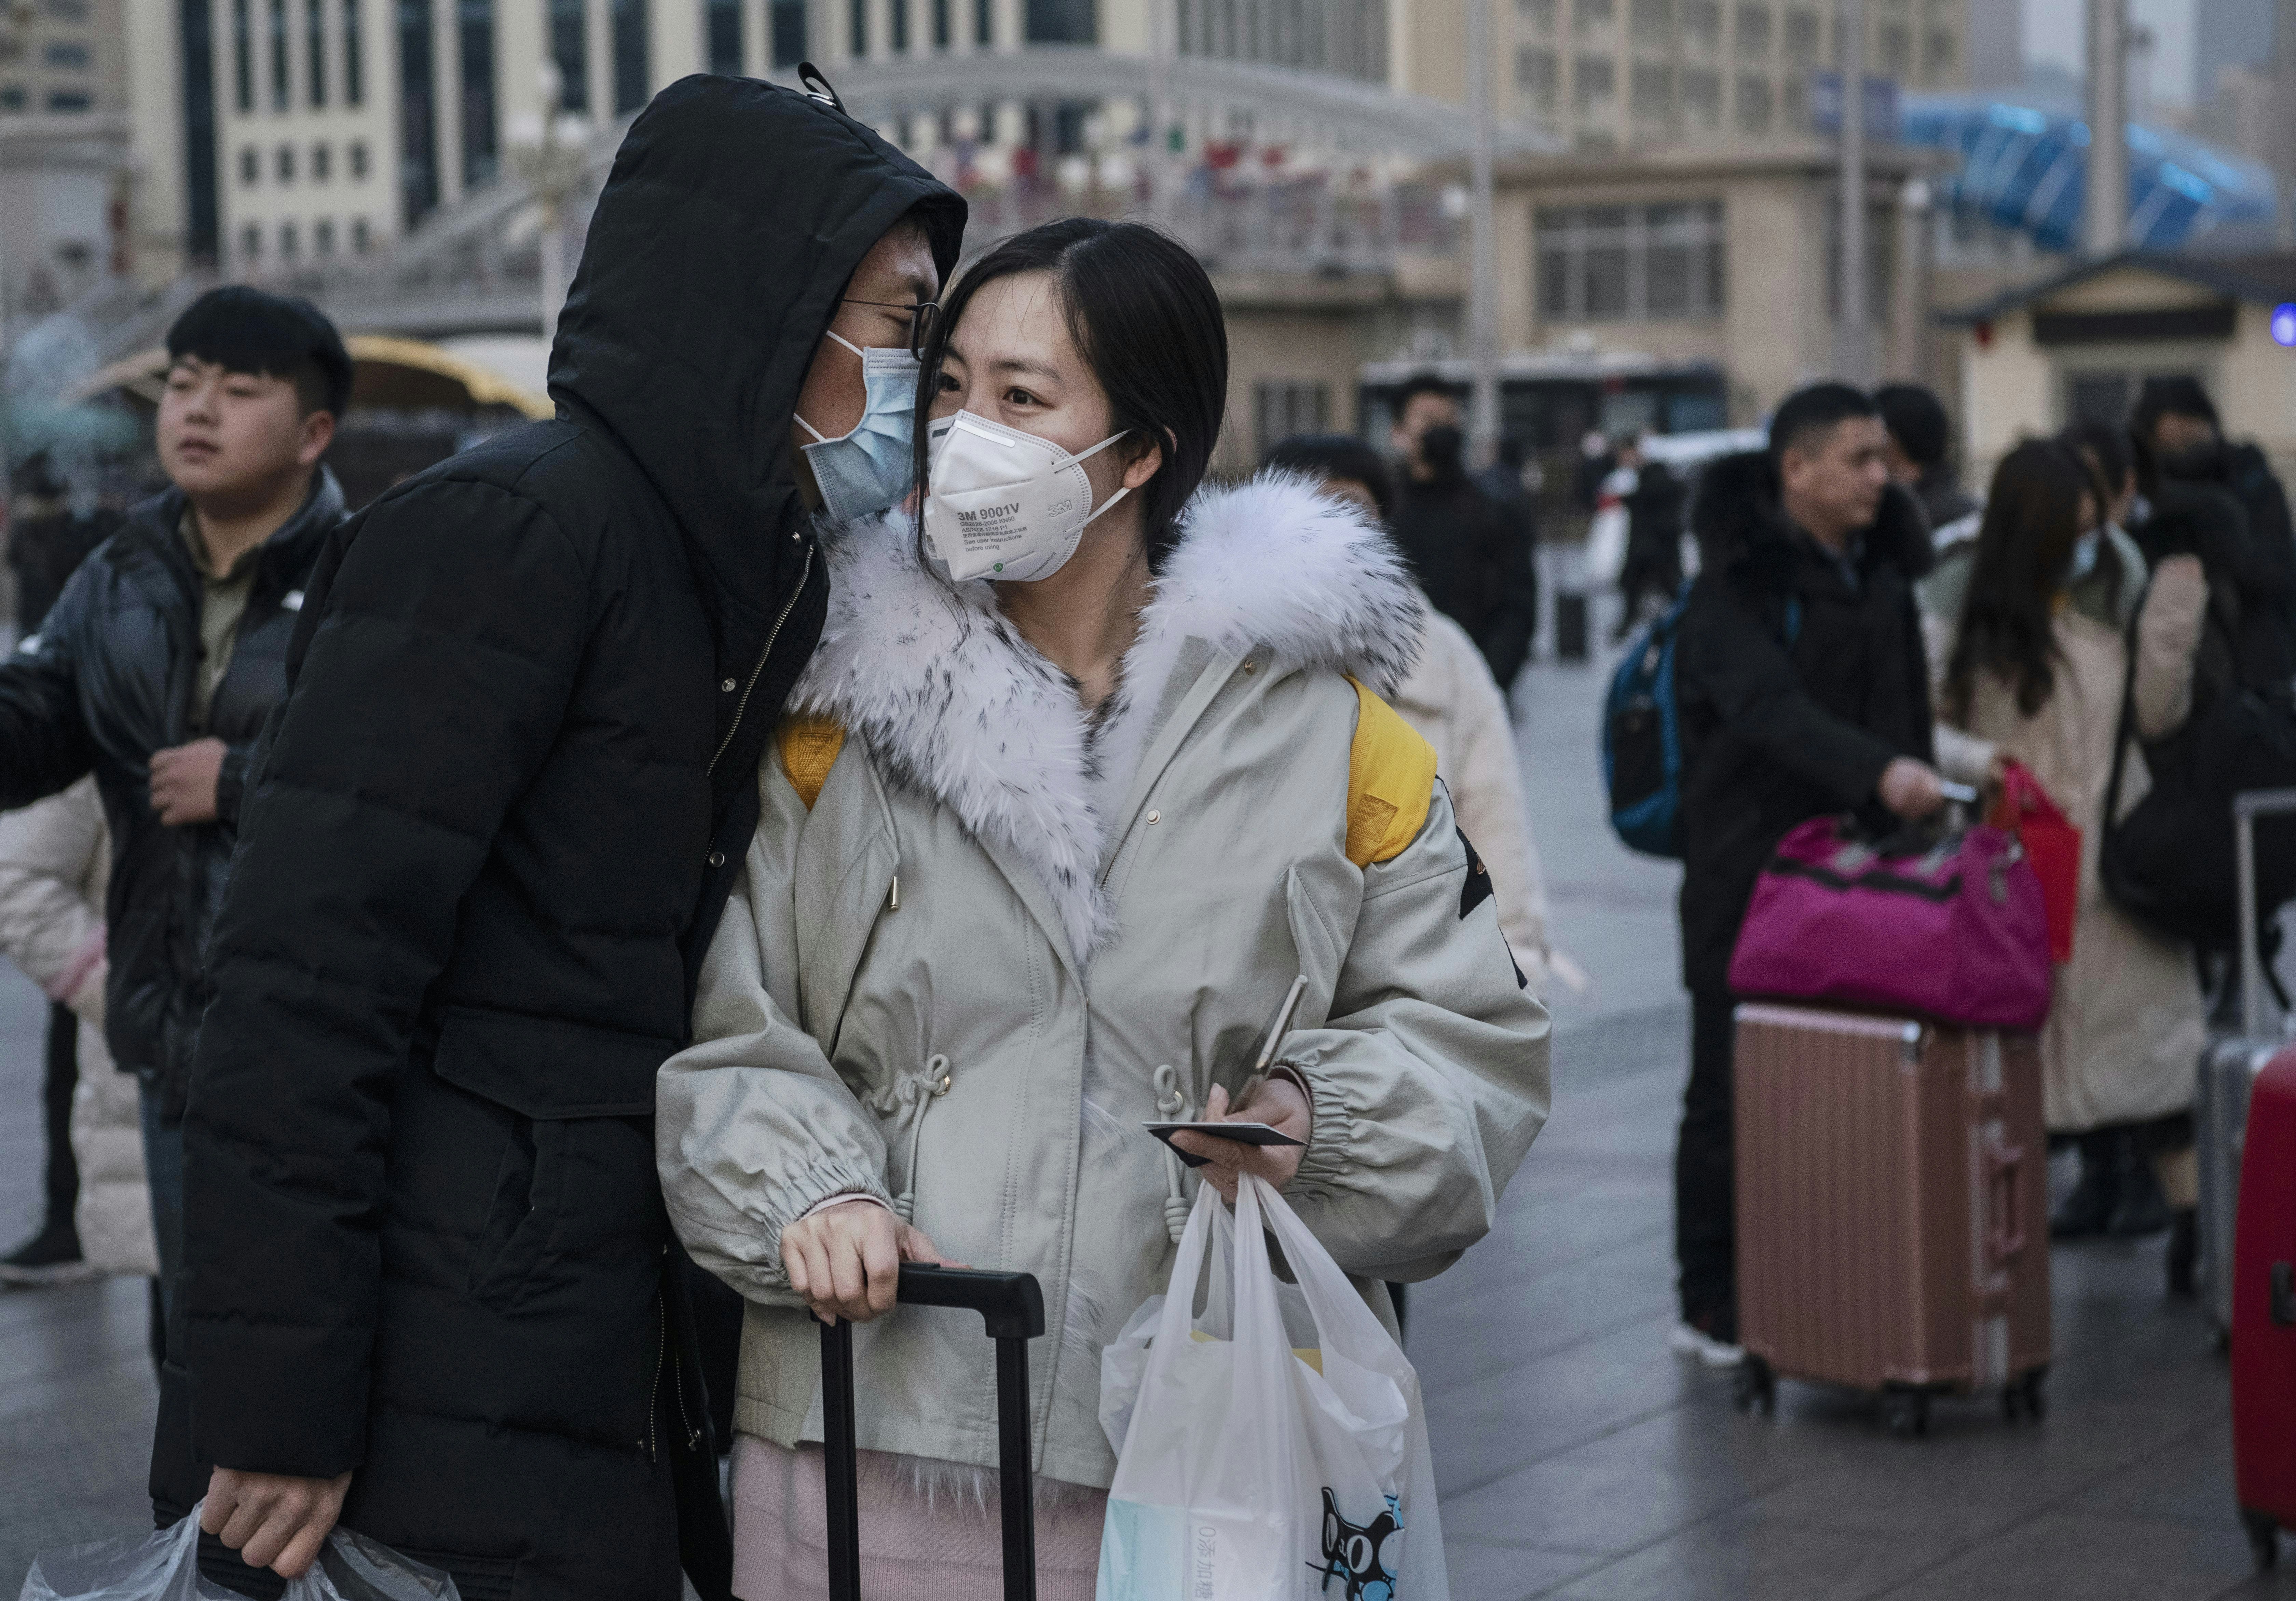 A man kisses his partner goodbye, both wearing face masks, during the coronavirus pandemic in Beijing.